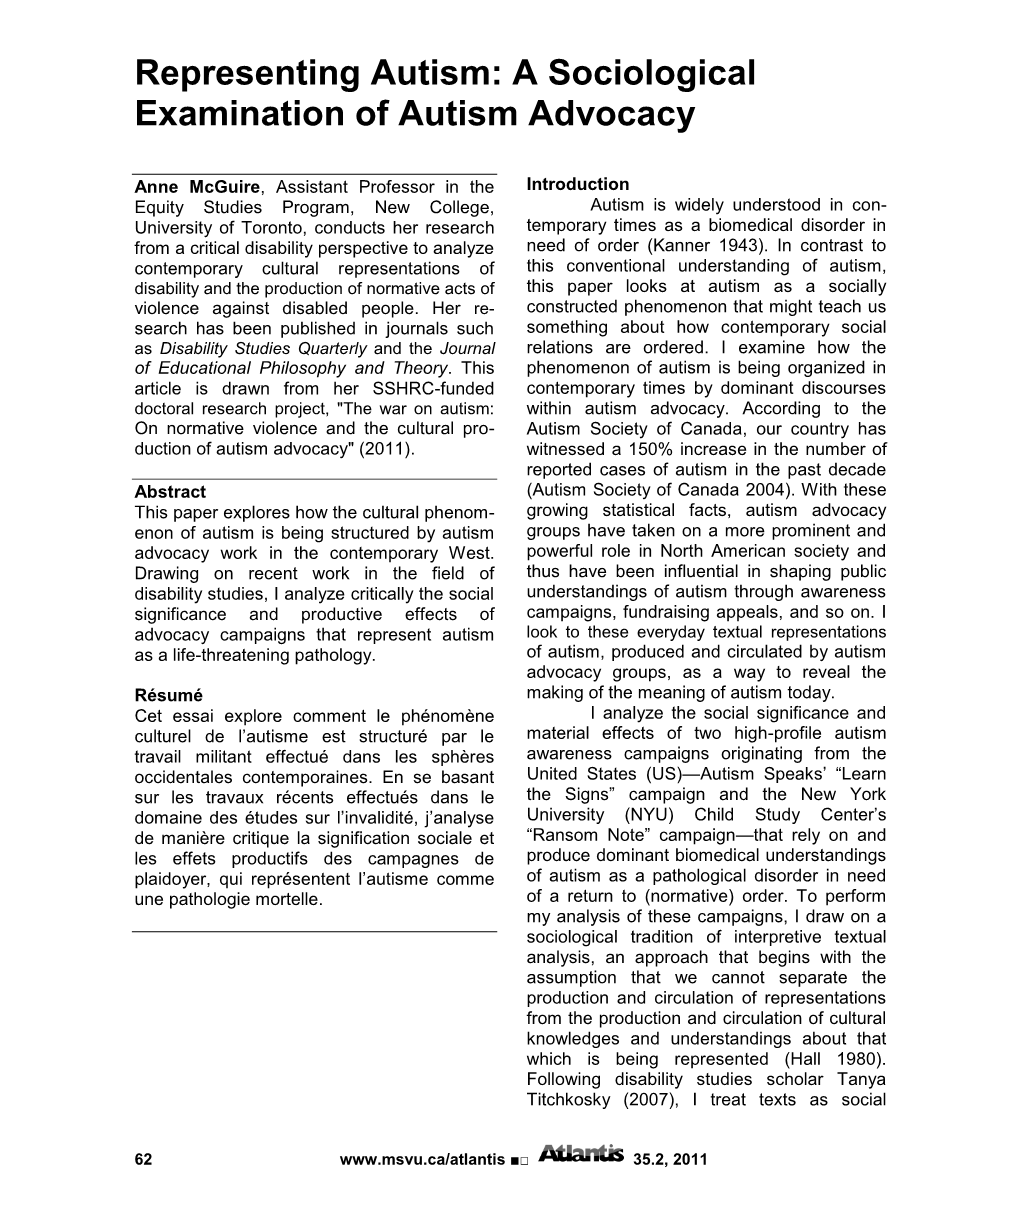 A Sociological Examination of Autism Advocacy